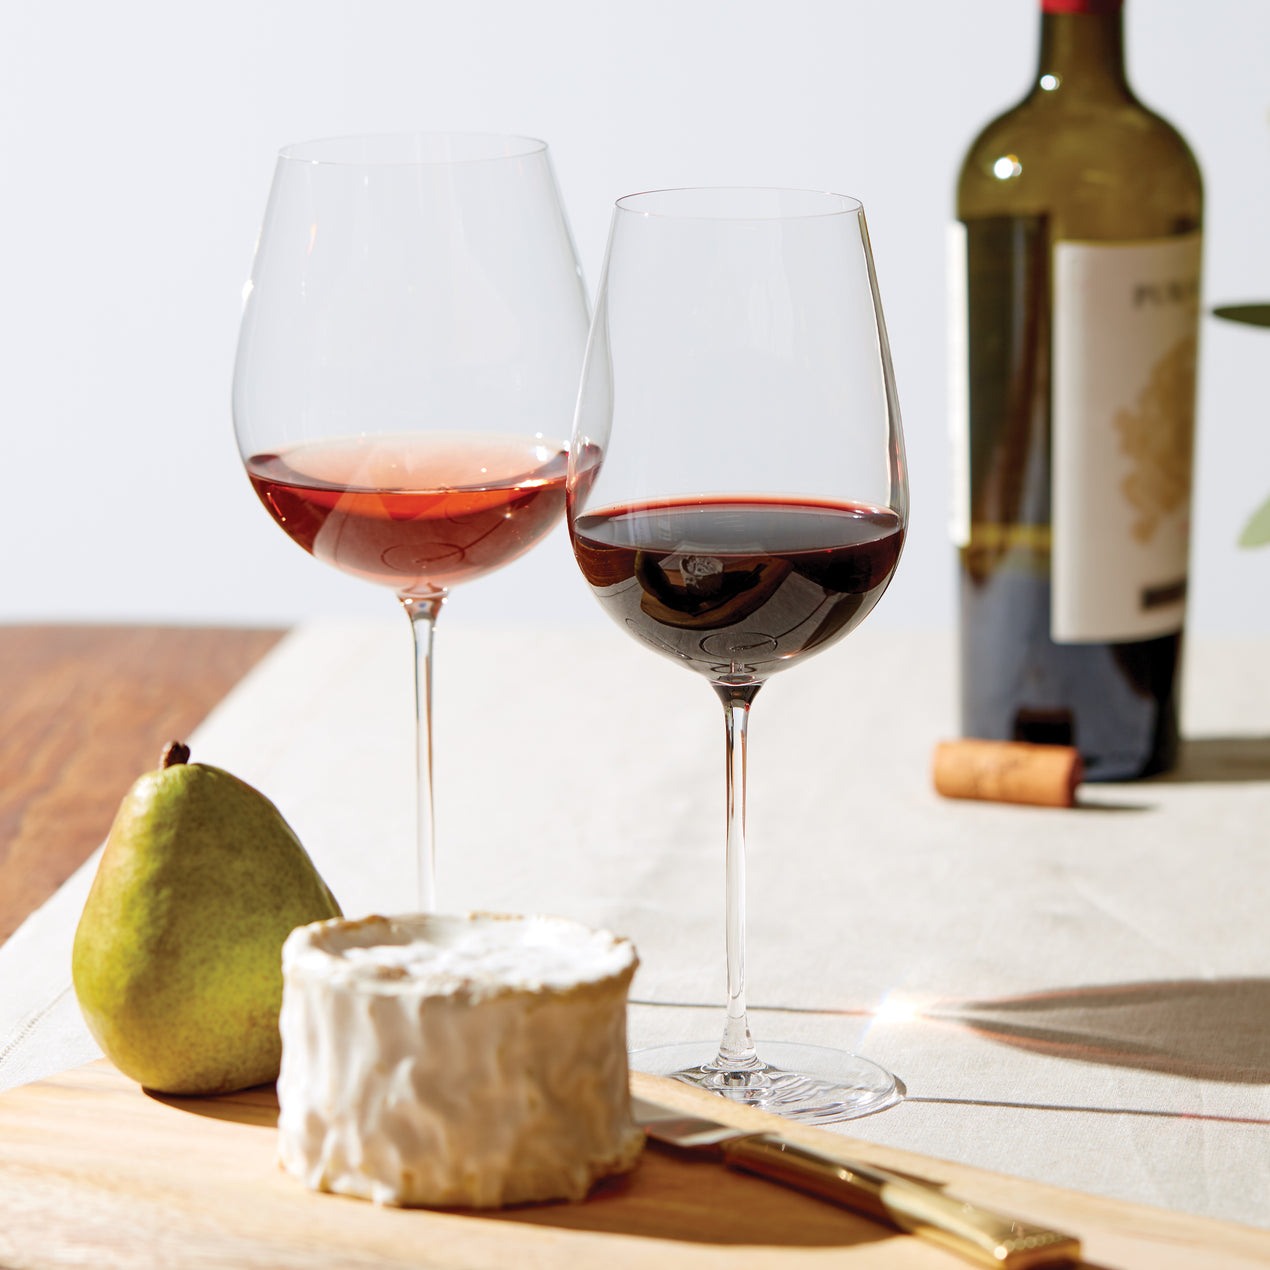 Villanova Red Wine Glasses - Set of 2 at M.LaHart & Co.